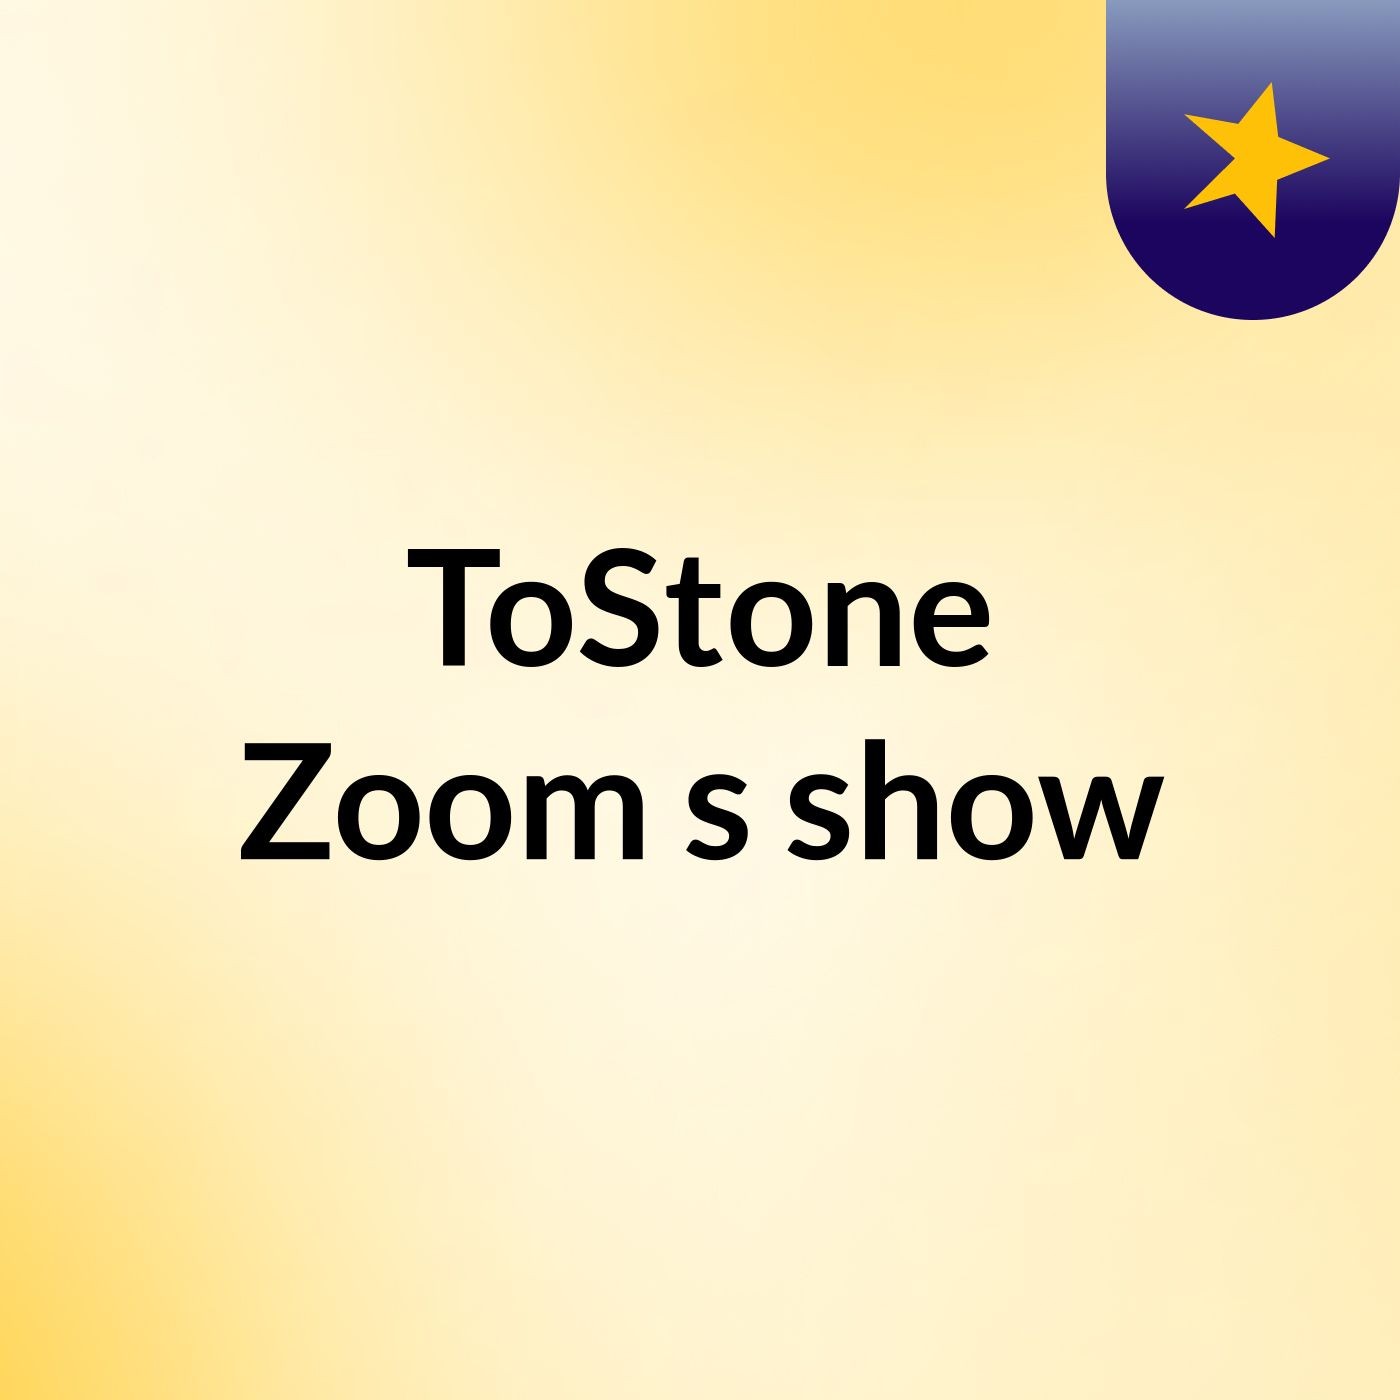 ToStone Zoom's show